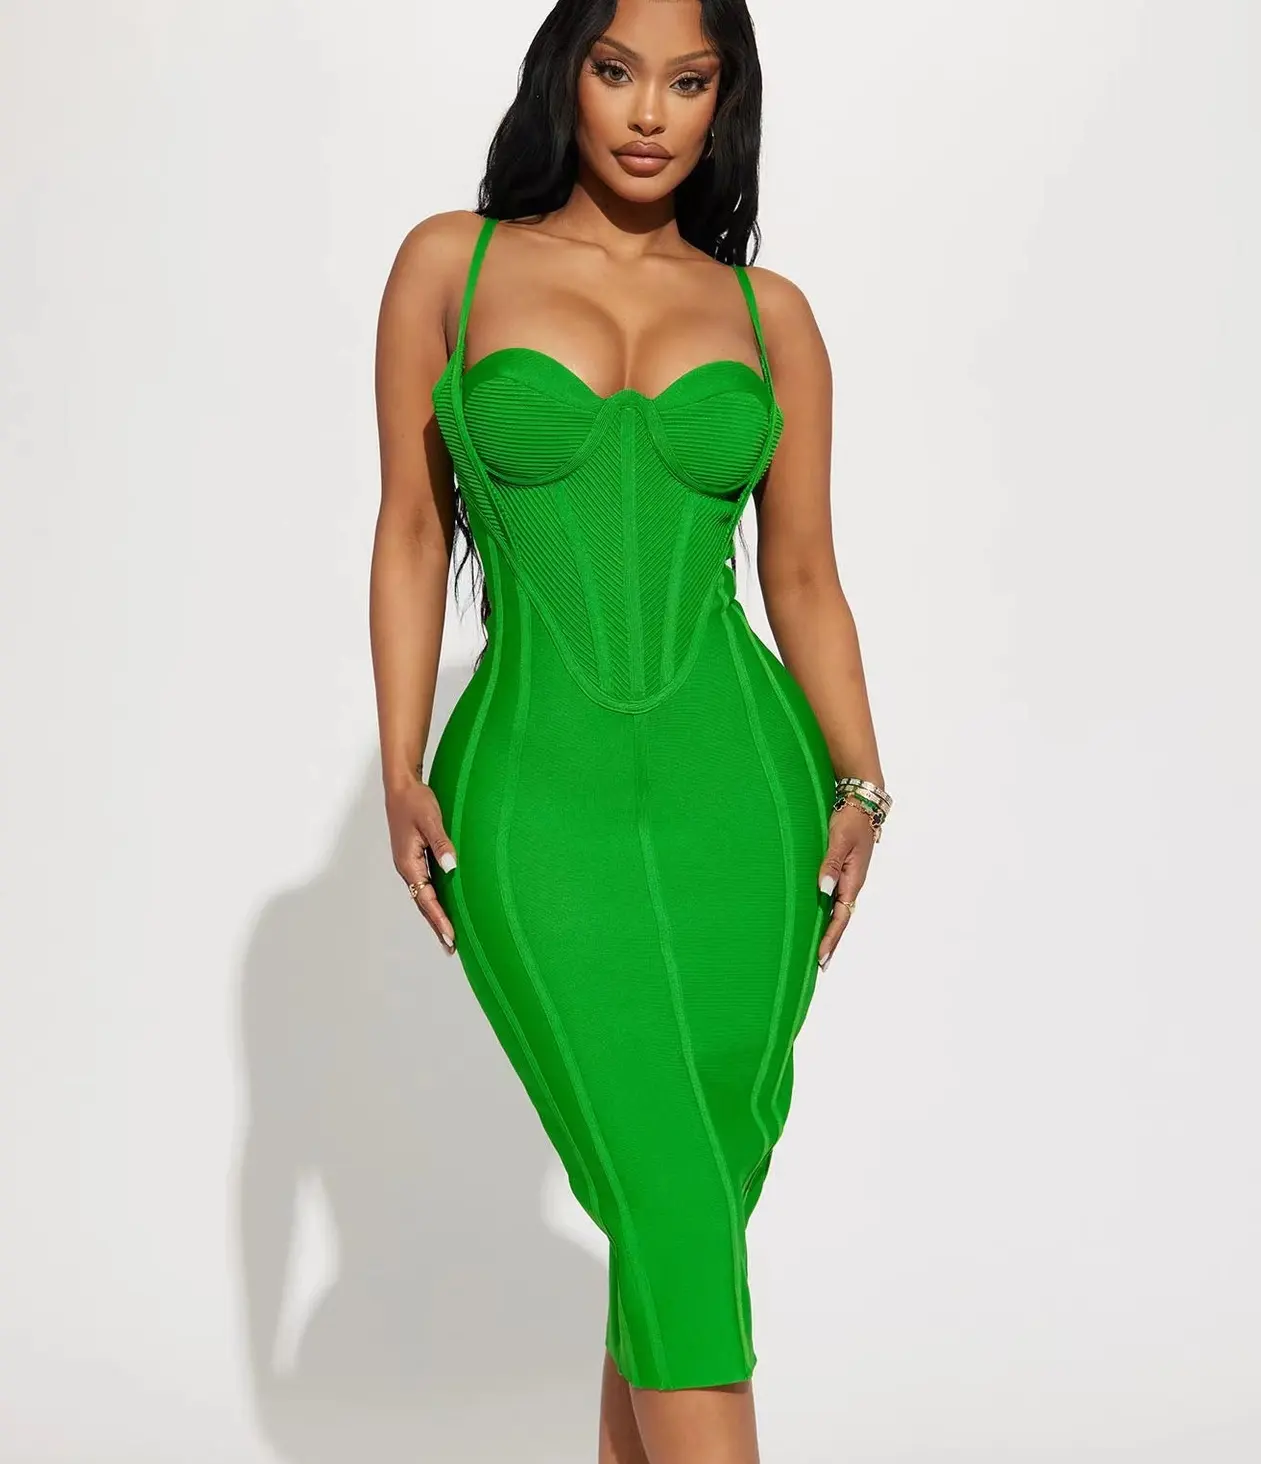 Hochwertiges gestricktes grünes Bandage formelles Abendkleid Kleid elegantes Korsett Spaghettiträger Bodycon knielange Partykleider Damen